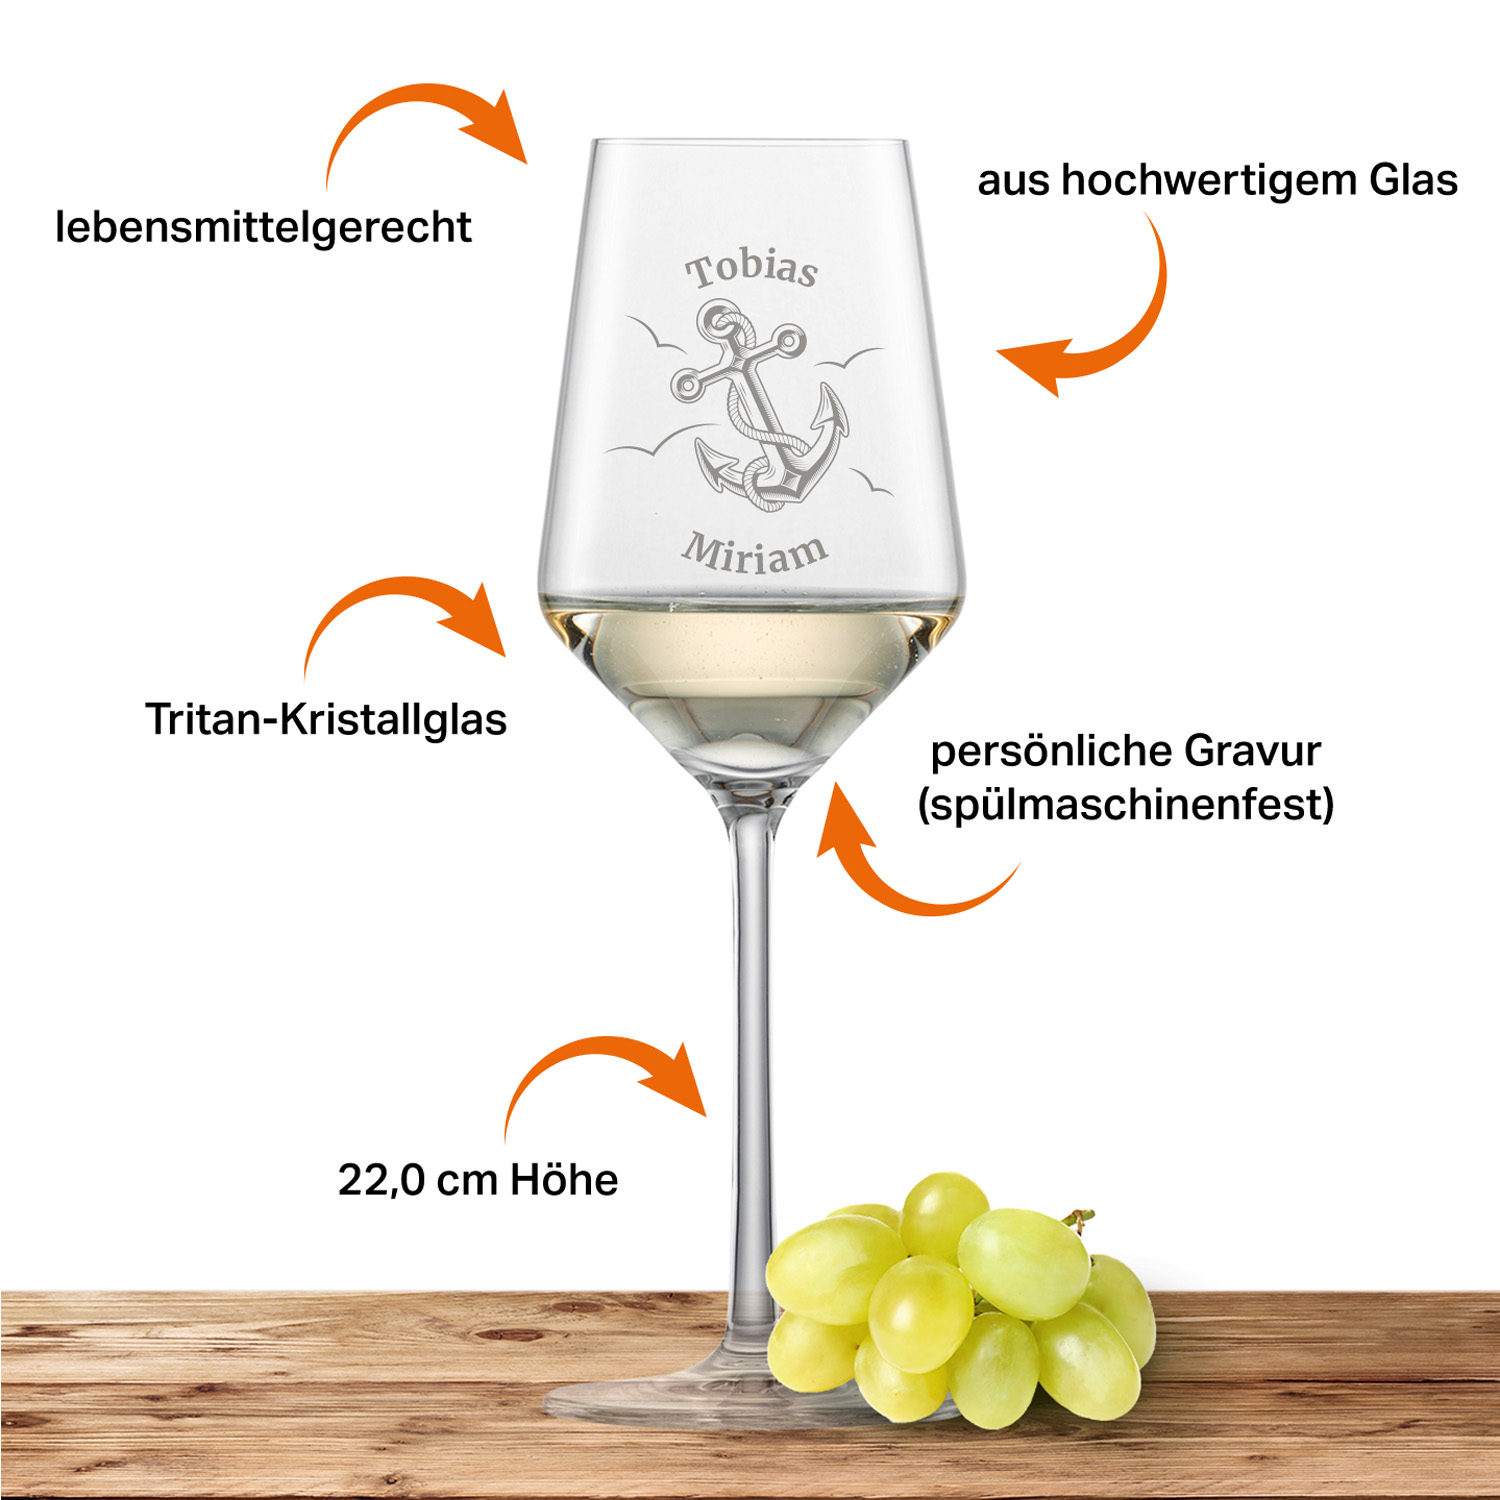 Schott Zwiesel Riesling Weißweinglas PURE mit Namen oder Wunschtext graviert (Anker)